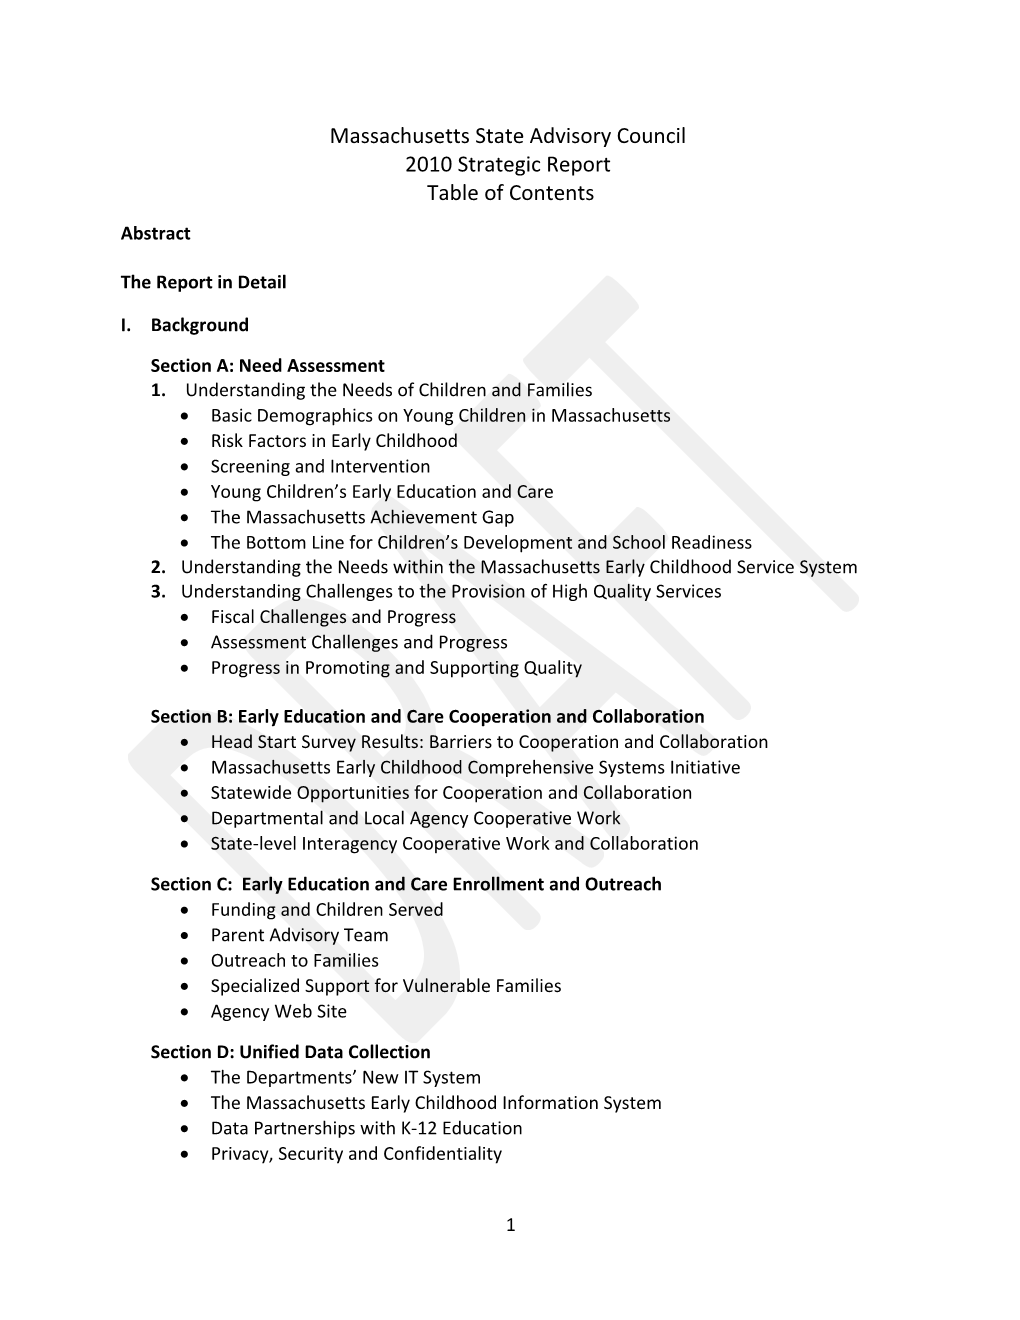 Massachusetts State Advisory Council Draft Strategic Report